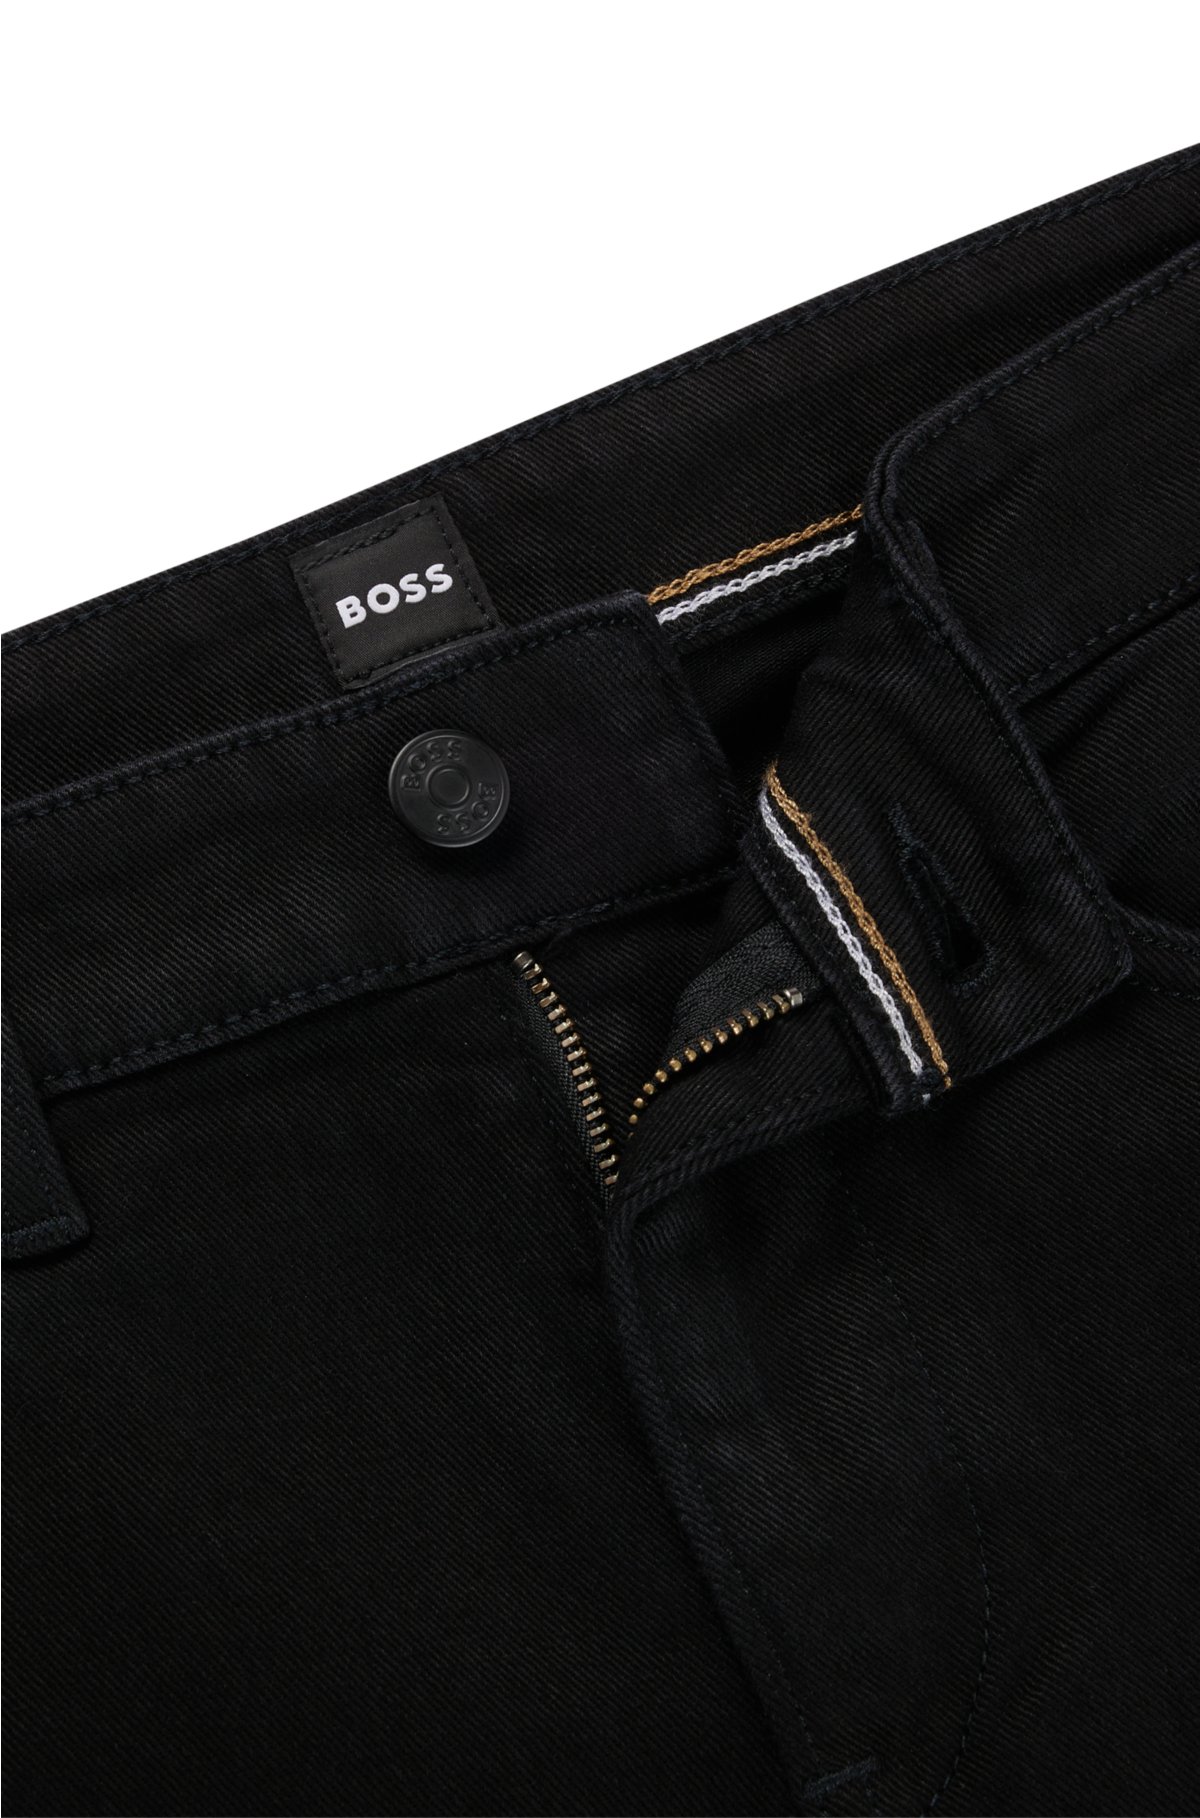 BOSS Slim-fit jeans in black super-soft Italian denim